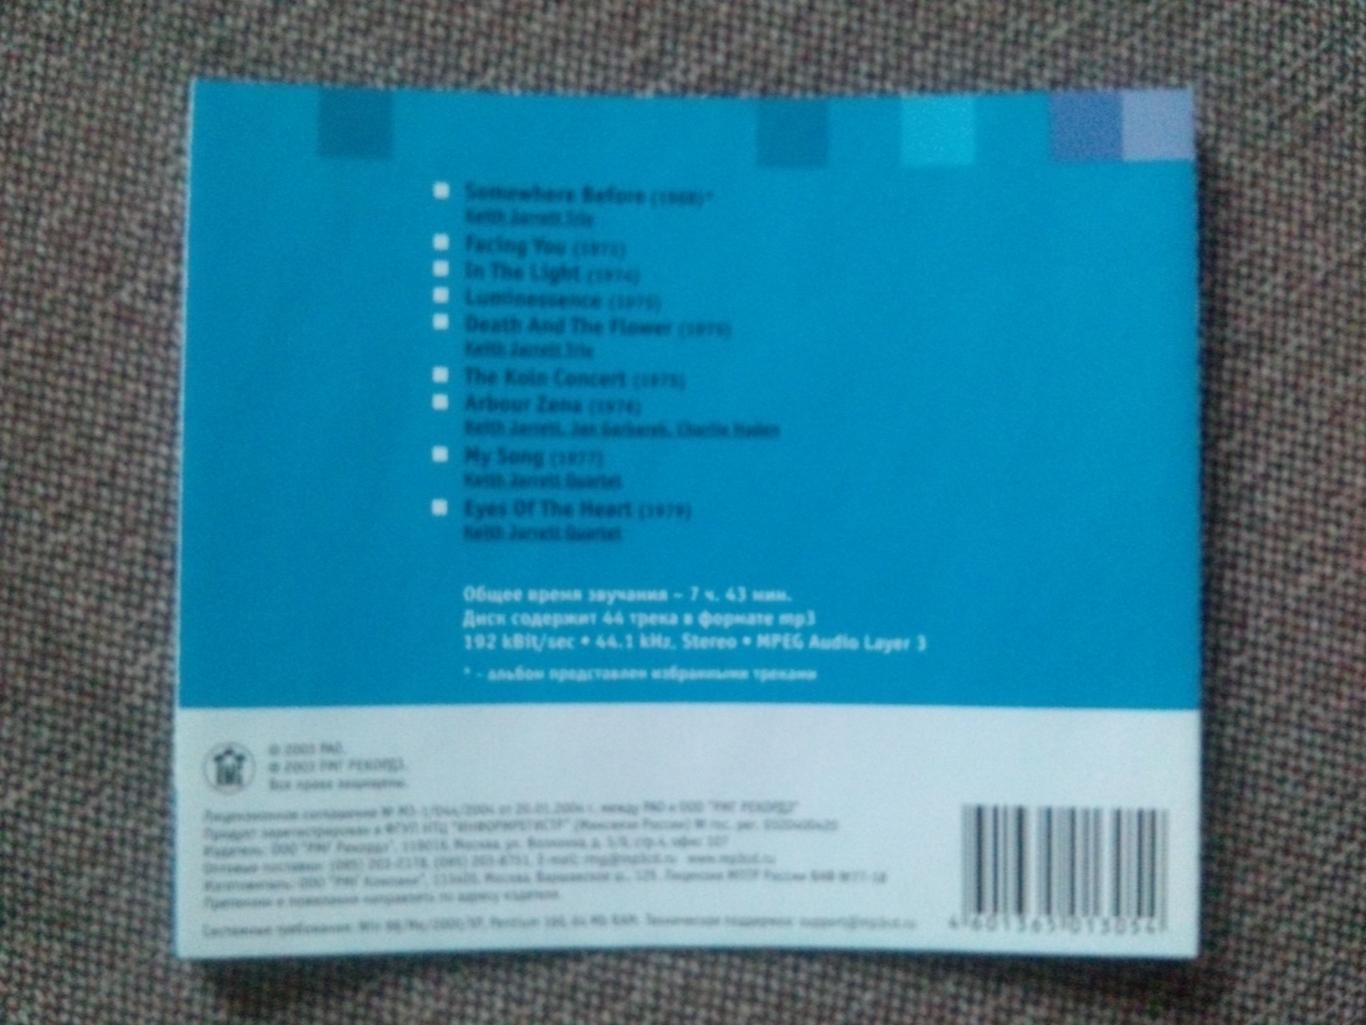 MP - 3 CD : Keith Jarrett (9 альбомов) 1968 - 1979 гг. Джаз Jazz Рок музыка 7